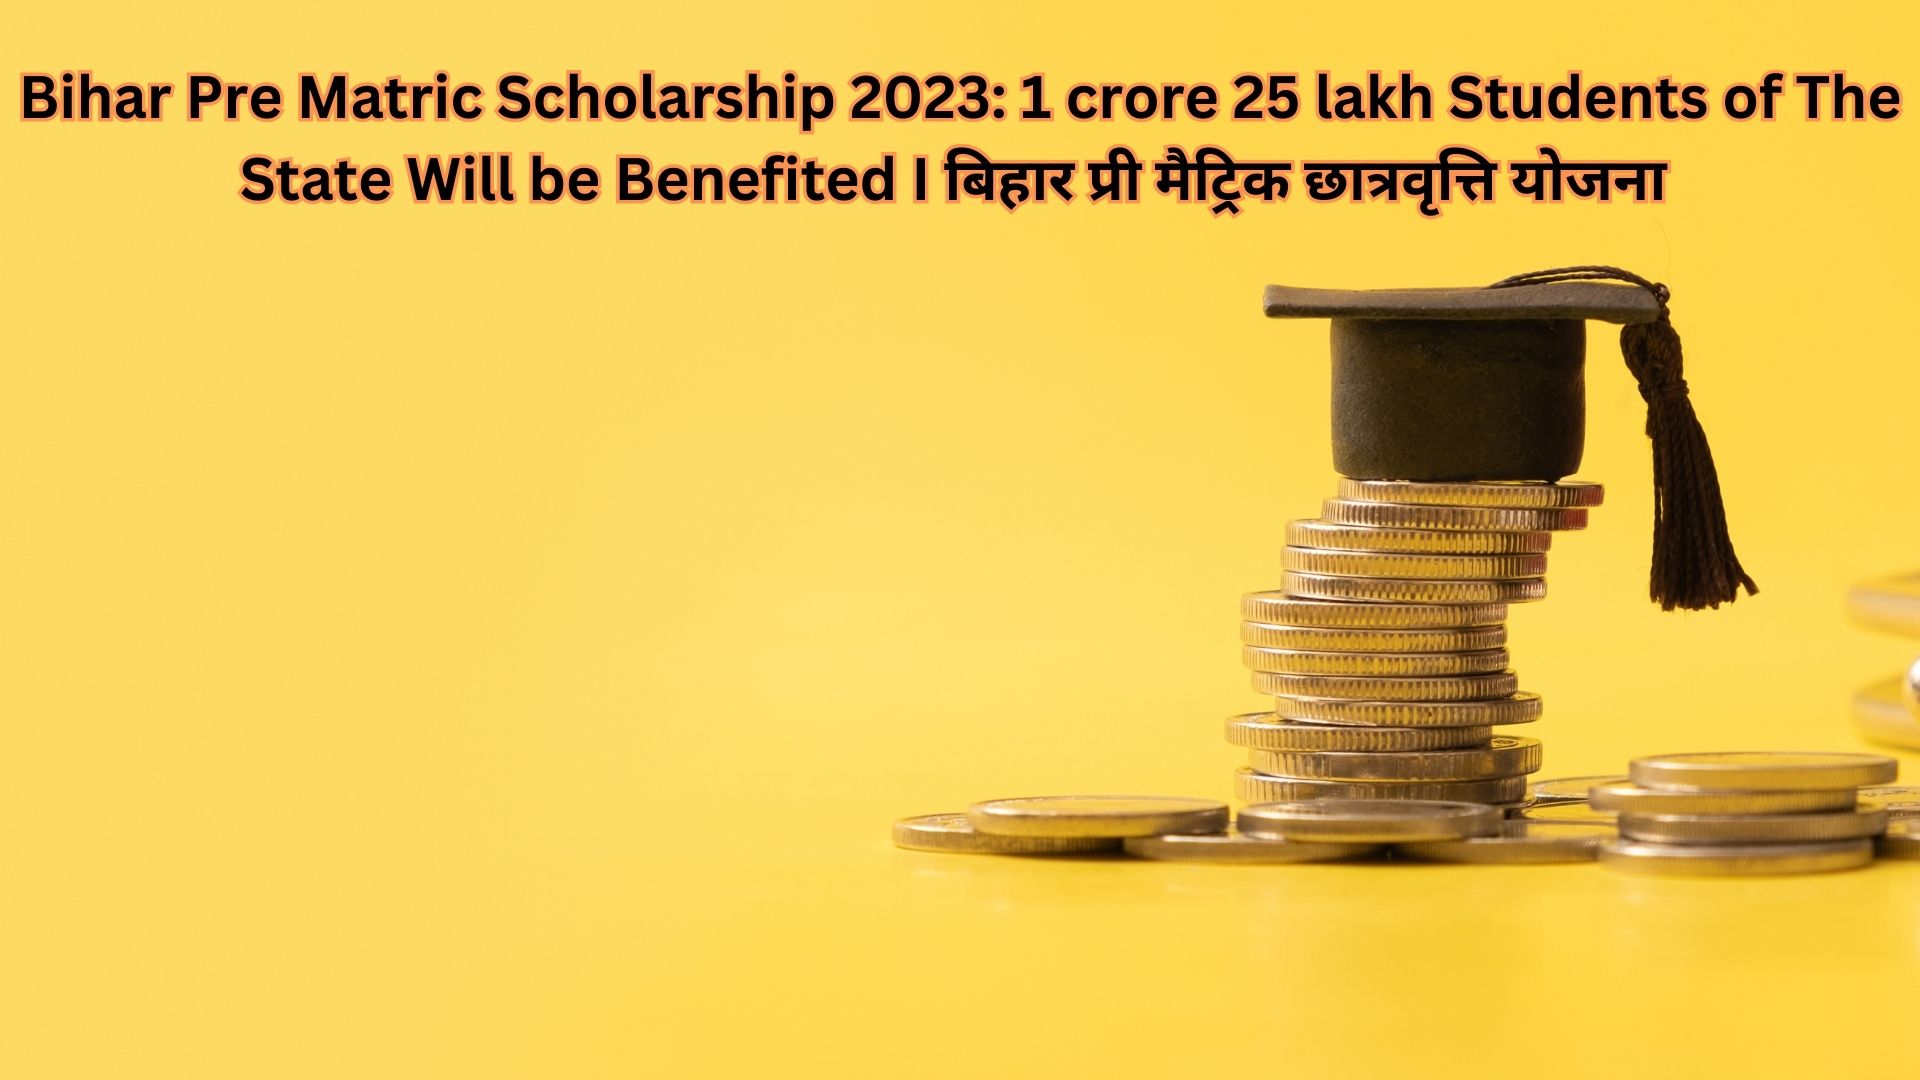 Bihar Pre Matric Scholarship 2023: 1 crore 25 lakh Students of The State Will be Benefited I बिहार प्री मैट्रिक छात्रवृत्ति योजना